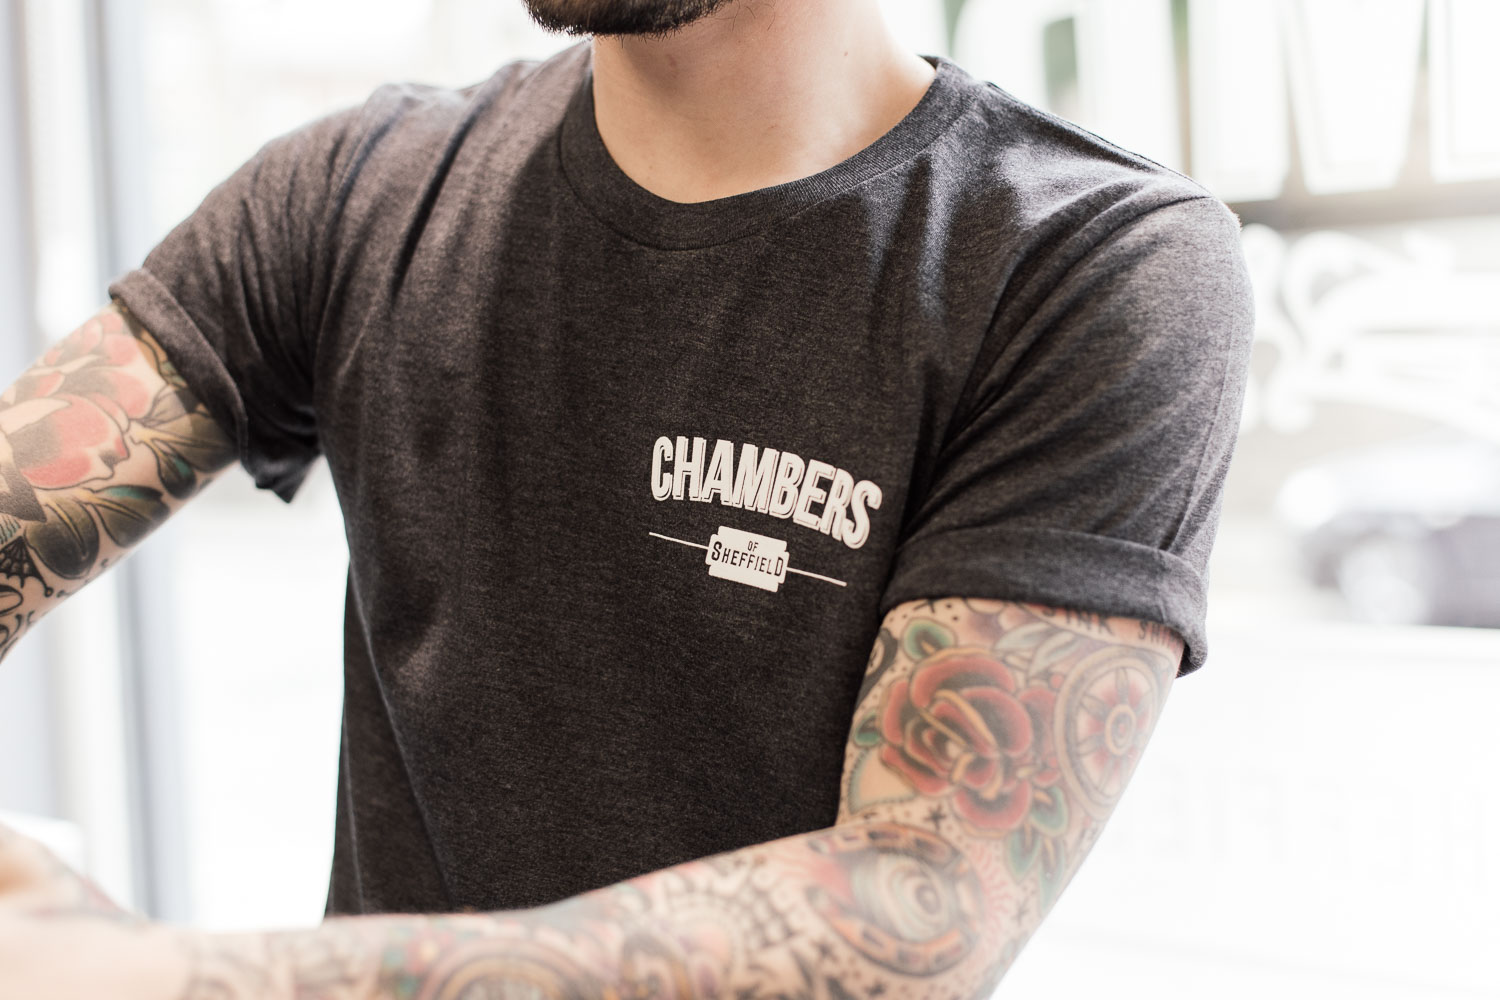 Chambers-of-Sheffield-printed-t-shirts-7783.jpg